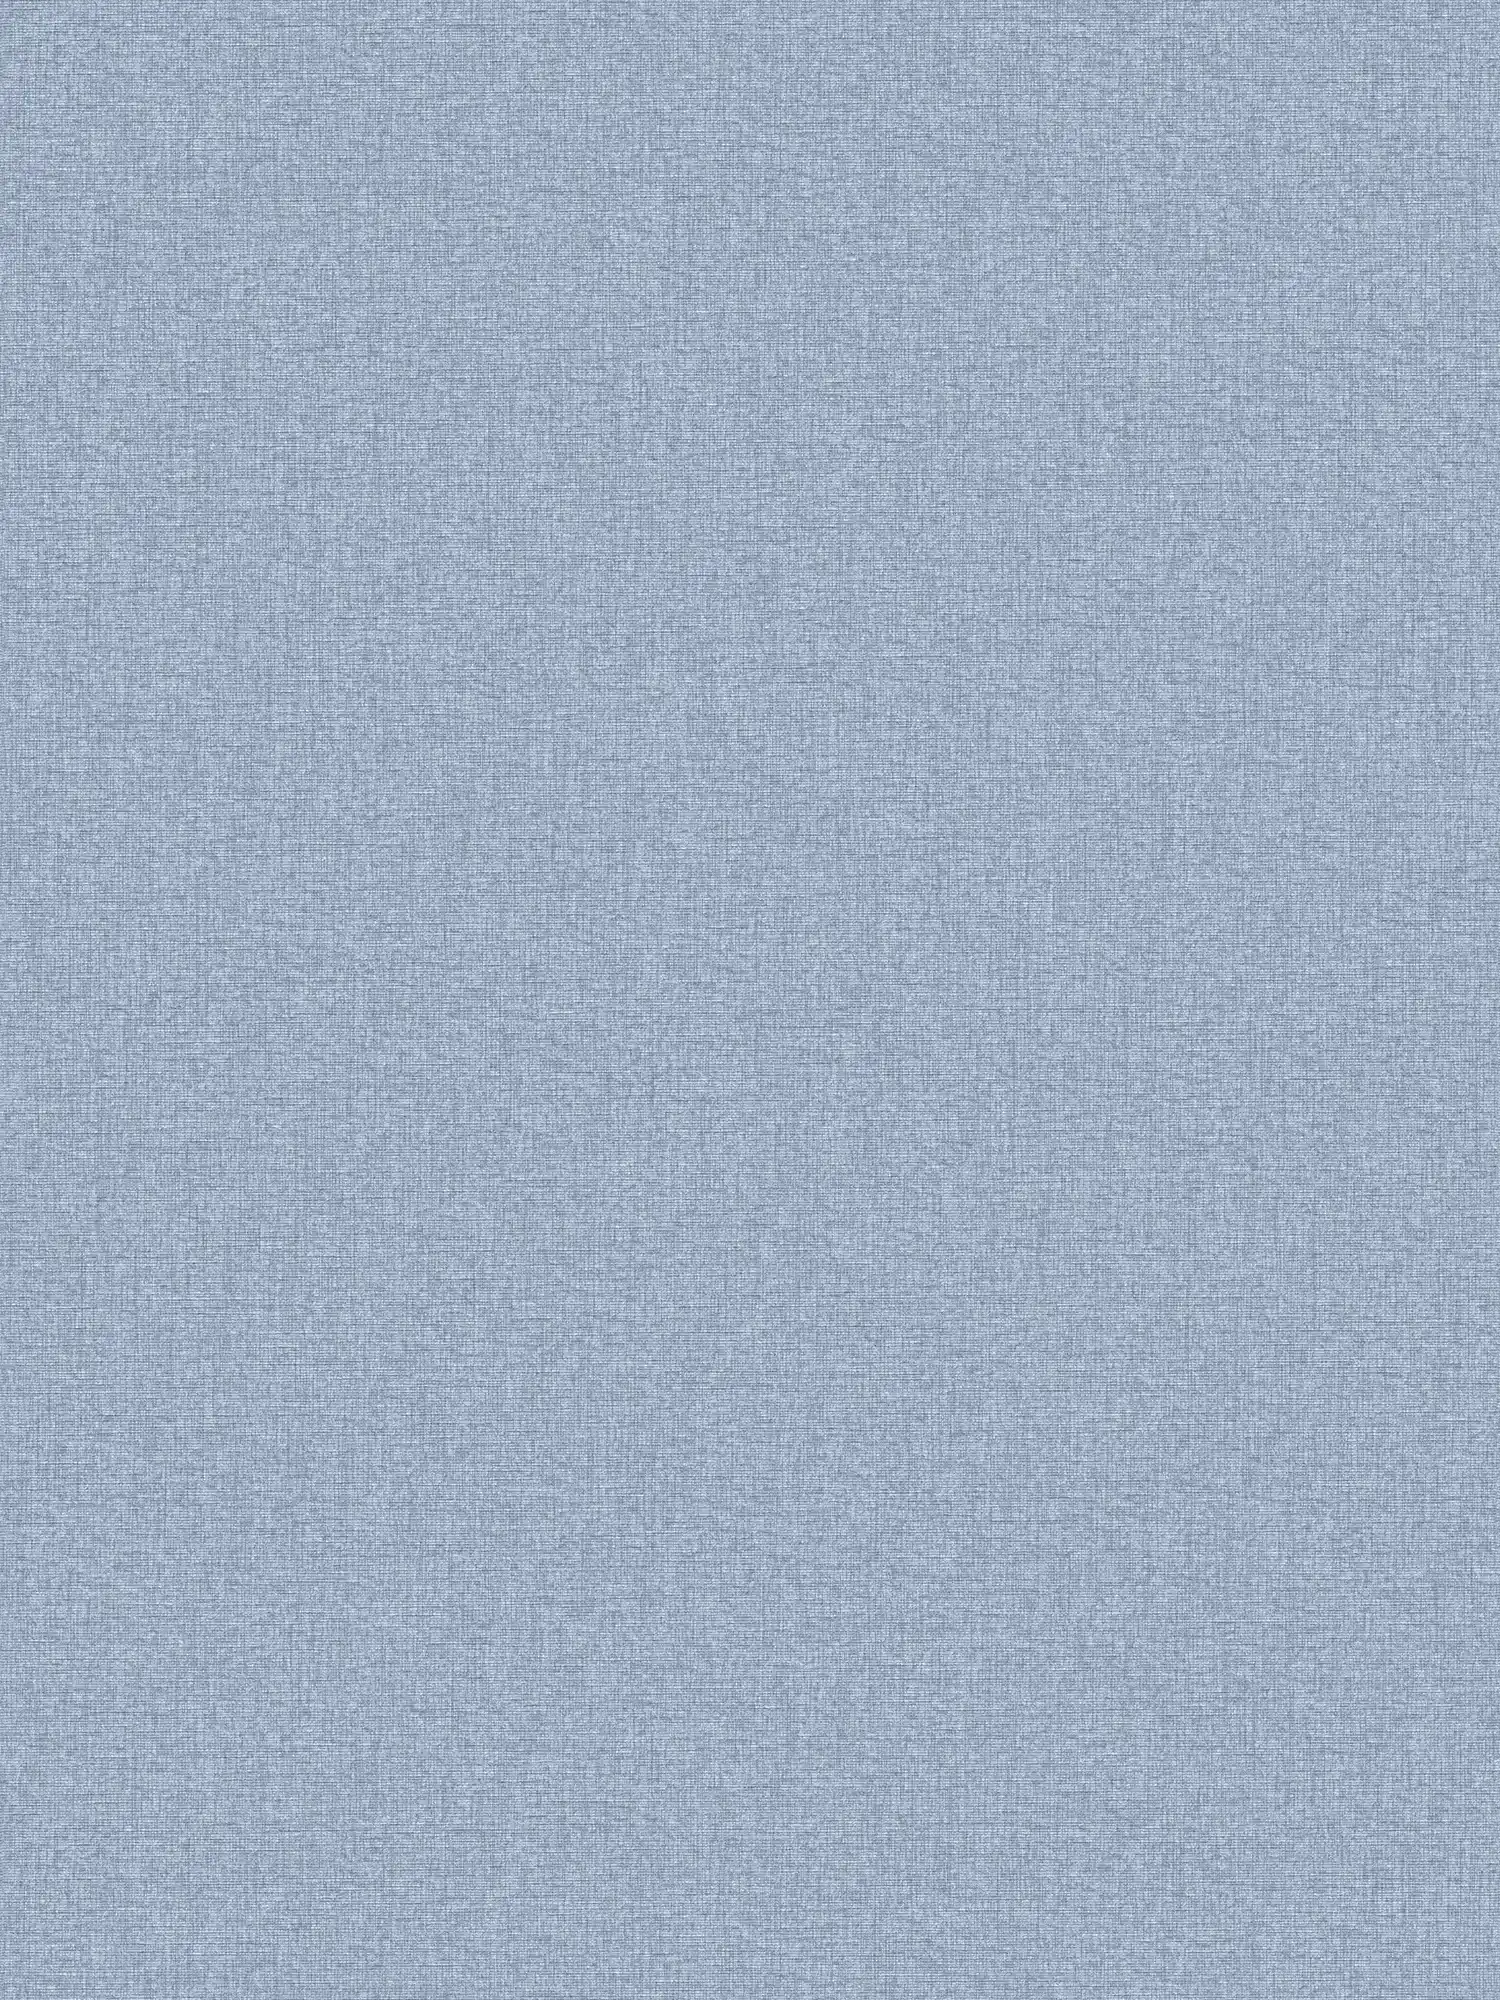         Papel pintado liso no tejido de aspecto textil con estructura ligera, mate - azul
    